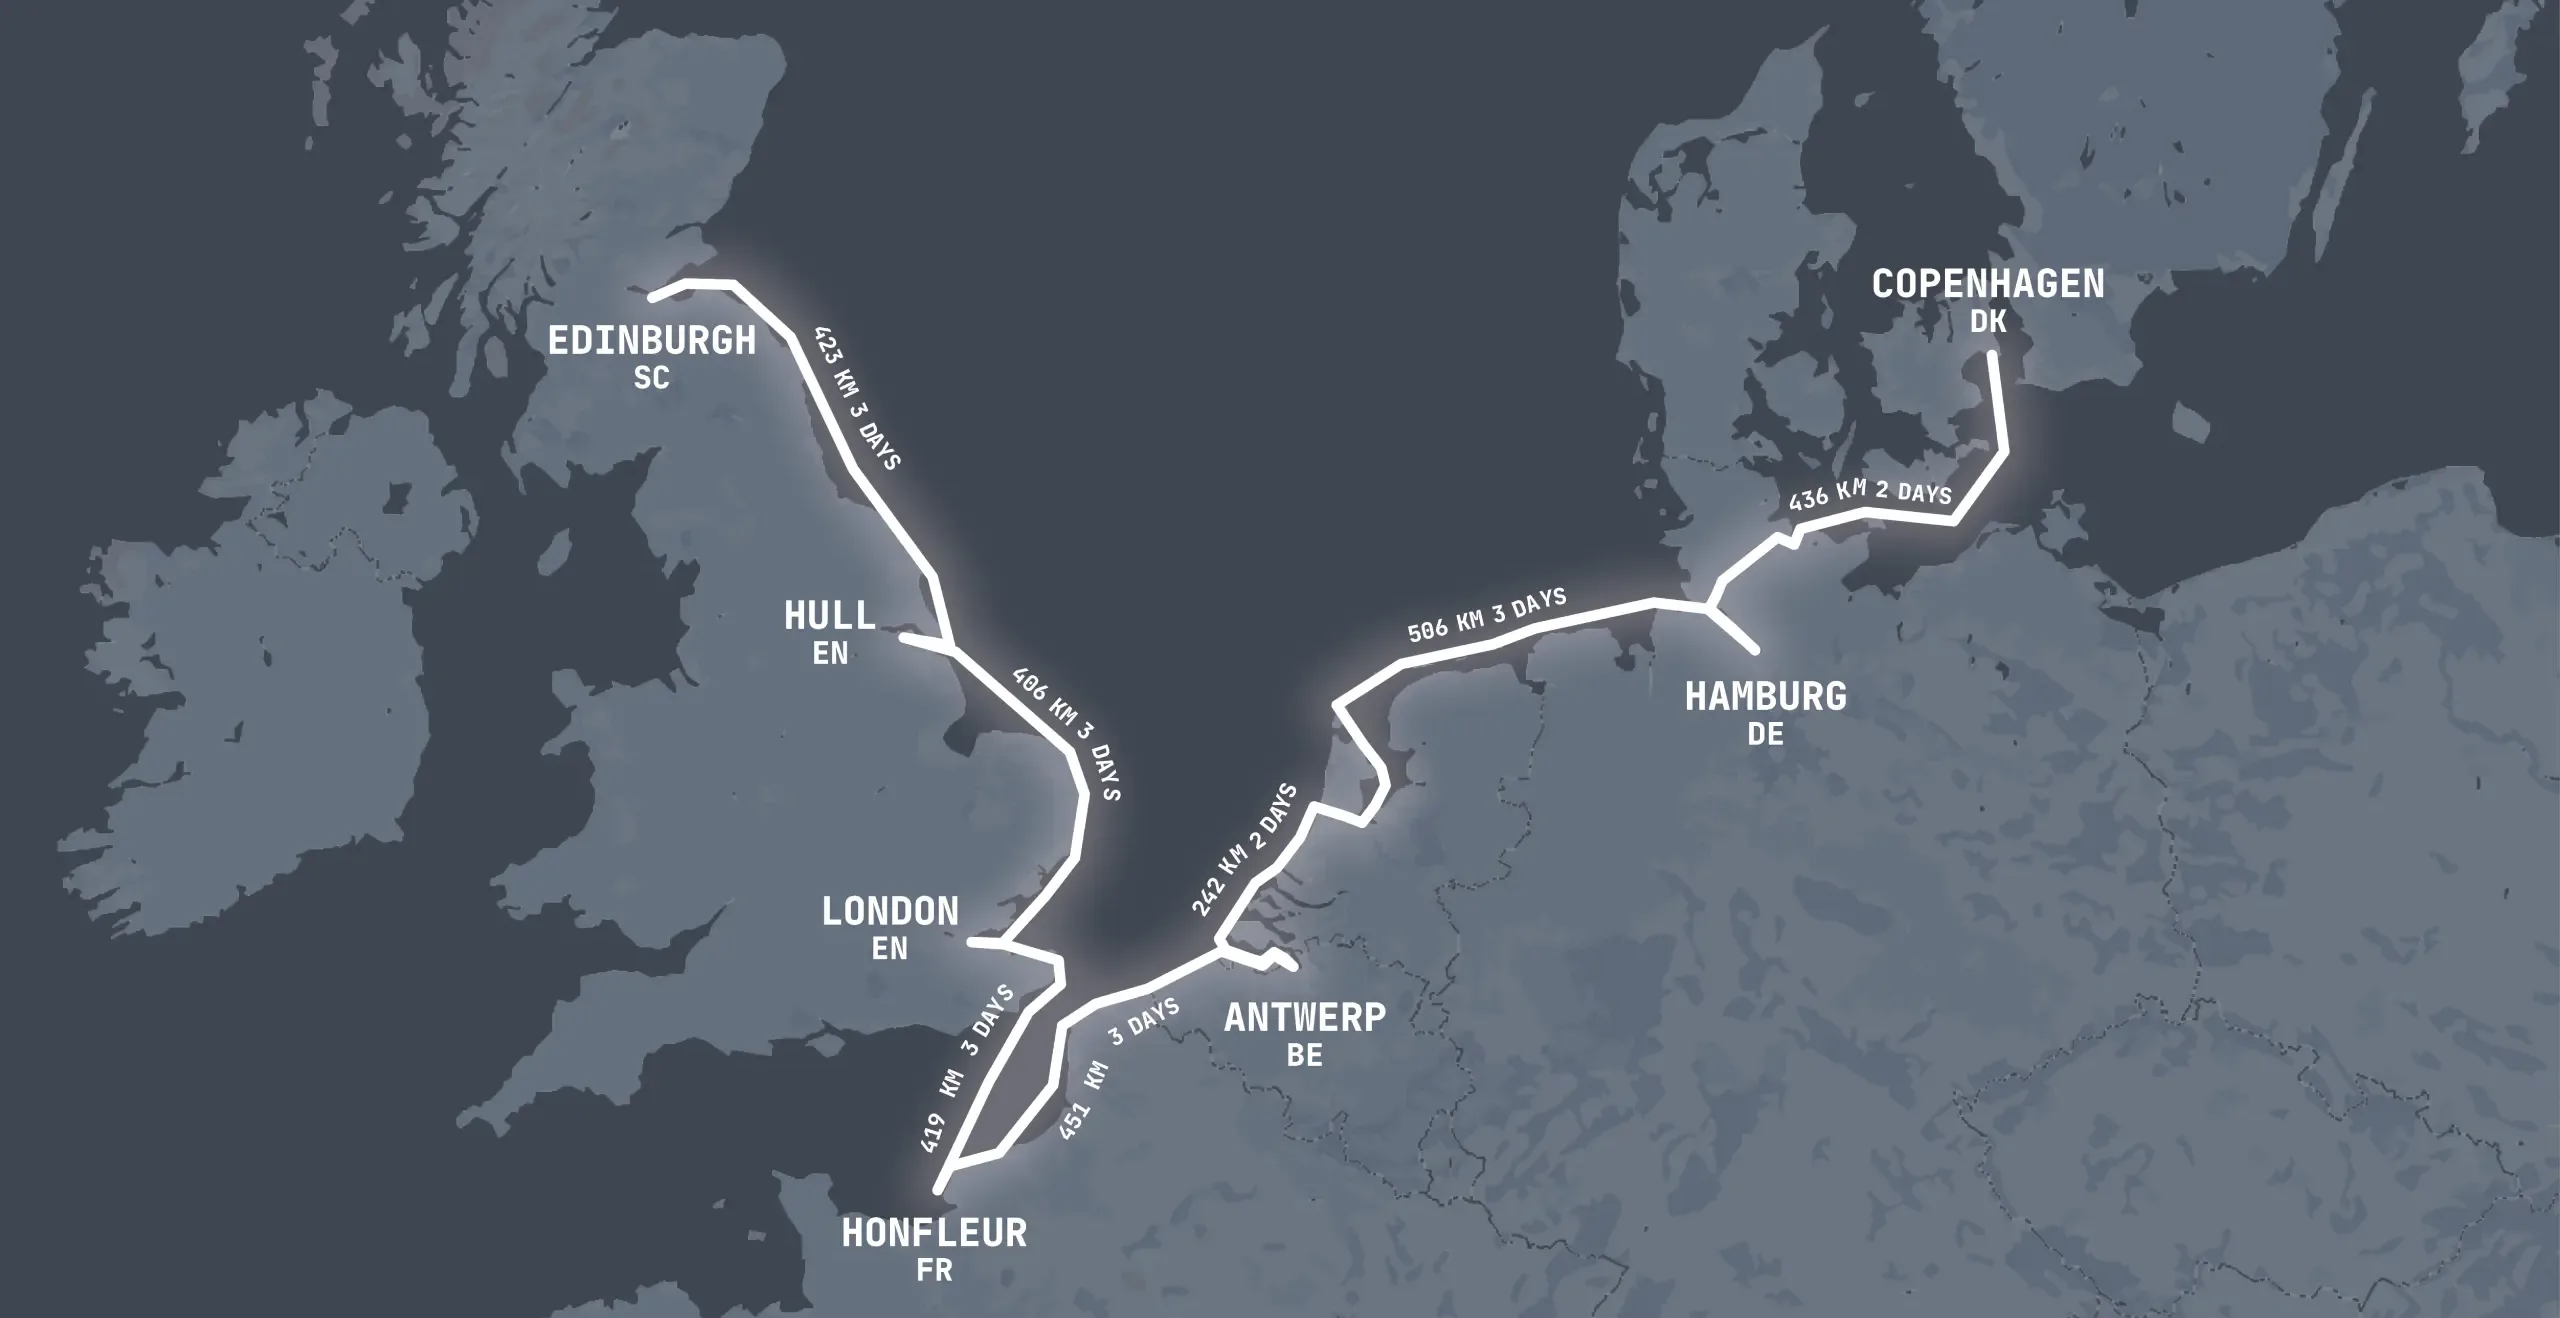 Map of the maiden voyage route. The route is Copenhagen, Hamburg, Antwerp, Honfleur, London, Hull, EdinBurgh.